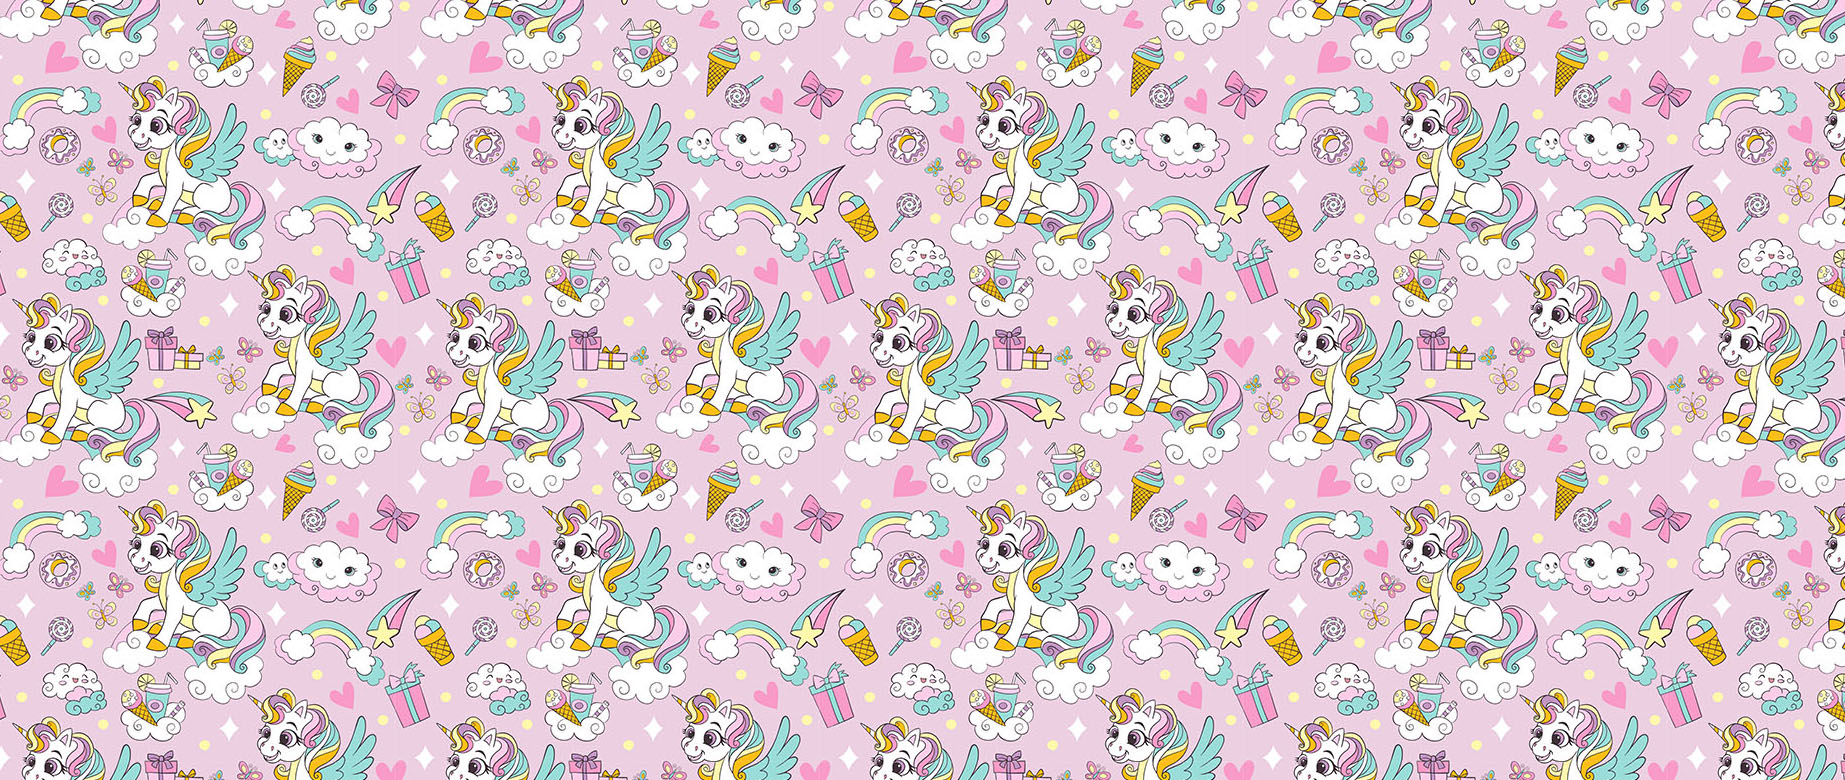 pink-unicorn-rainbow-ice-cream-wallpaper-seamless-repeat-view